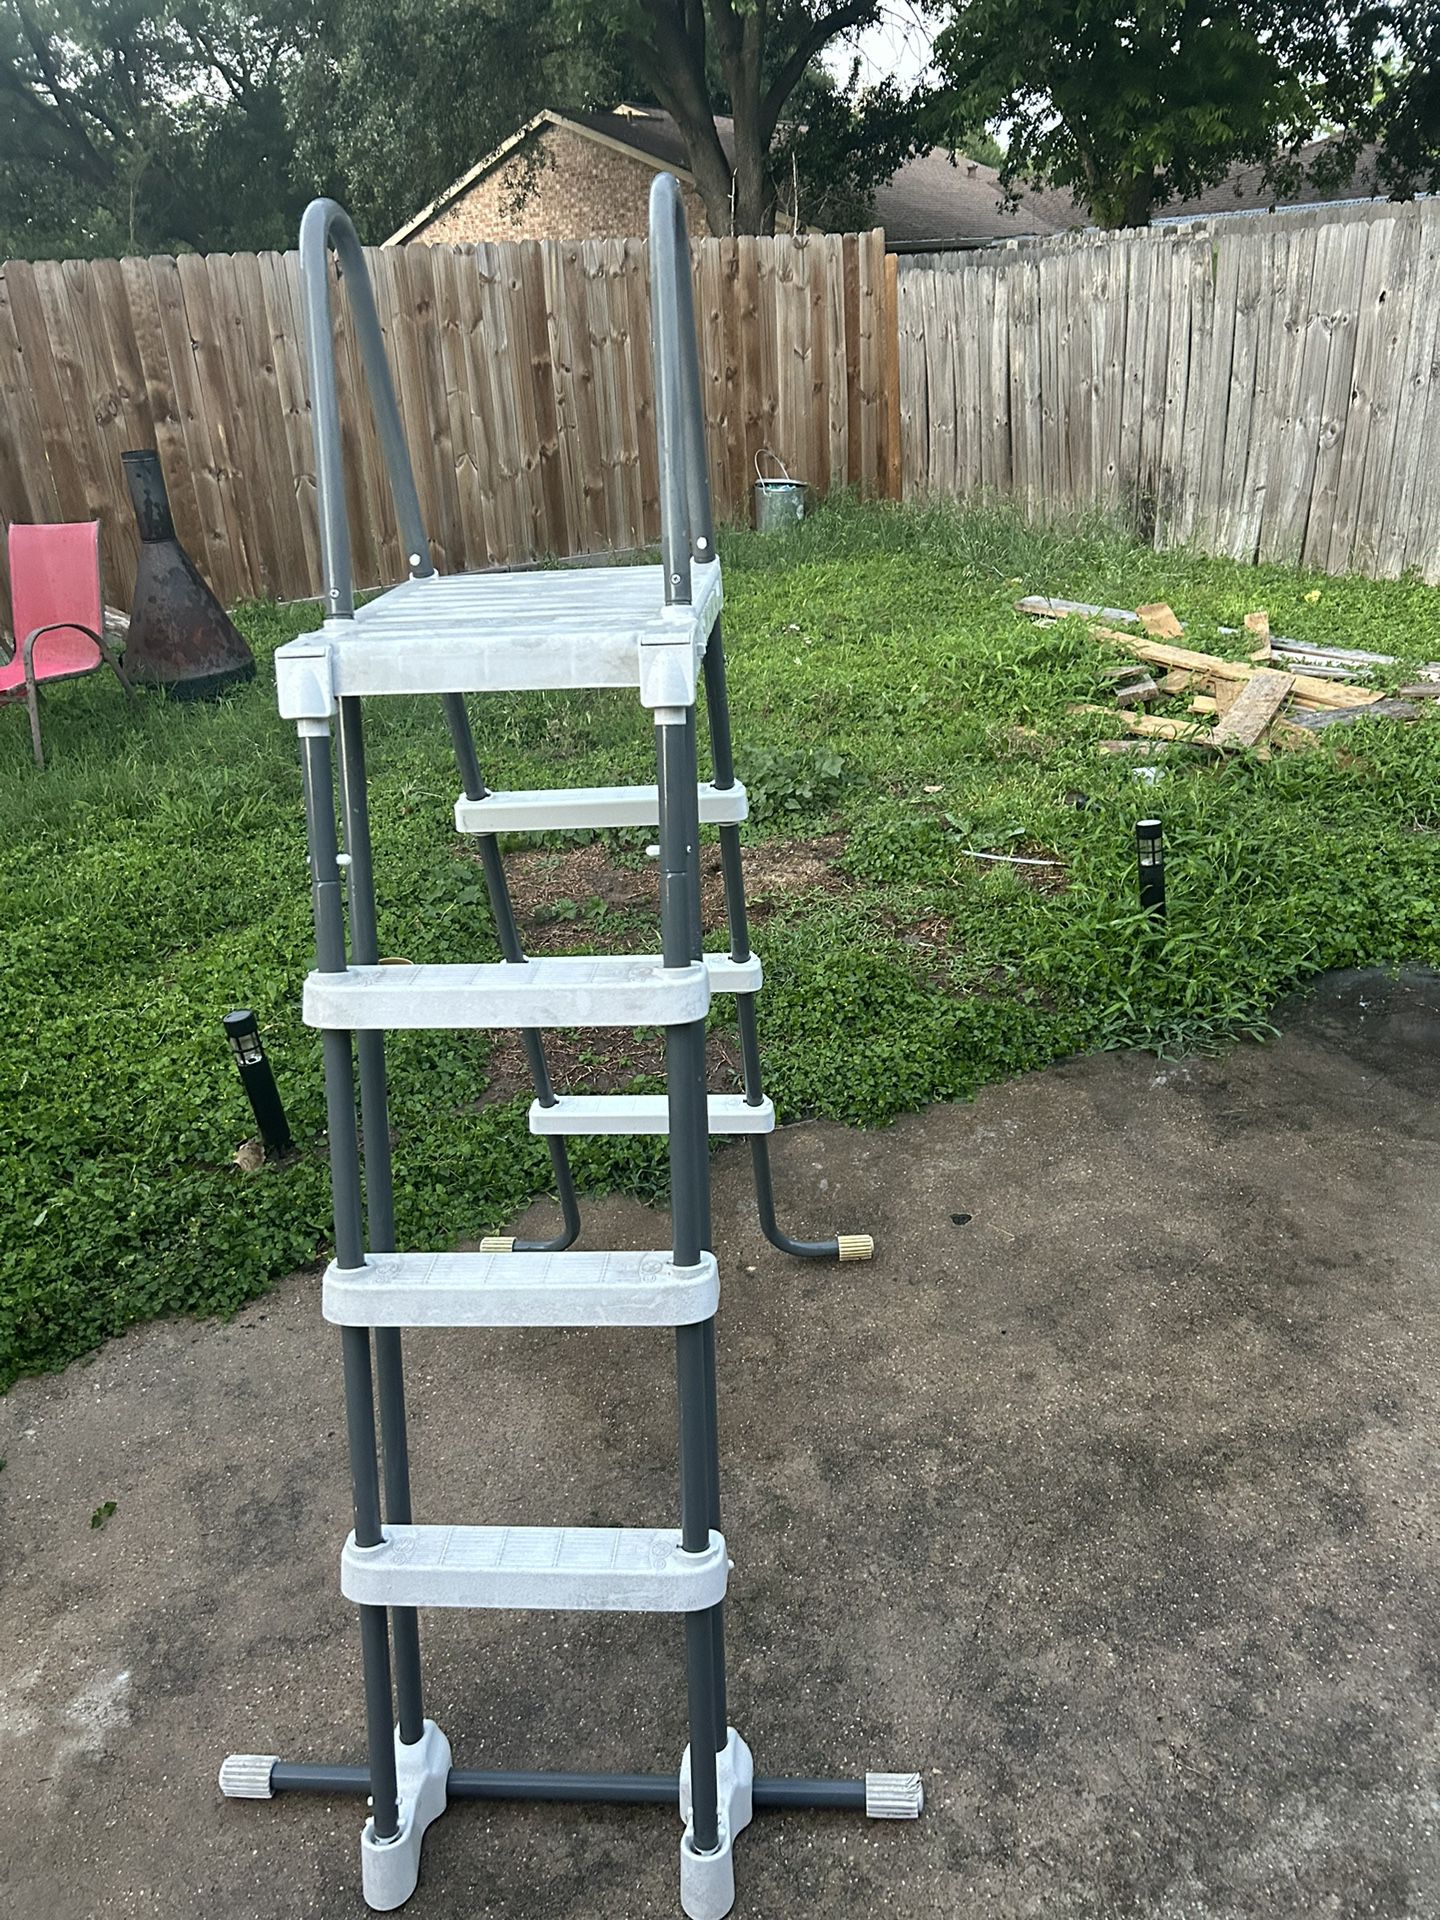 Above Pool Ladder - Sturdy 